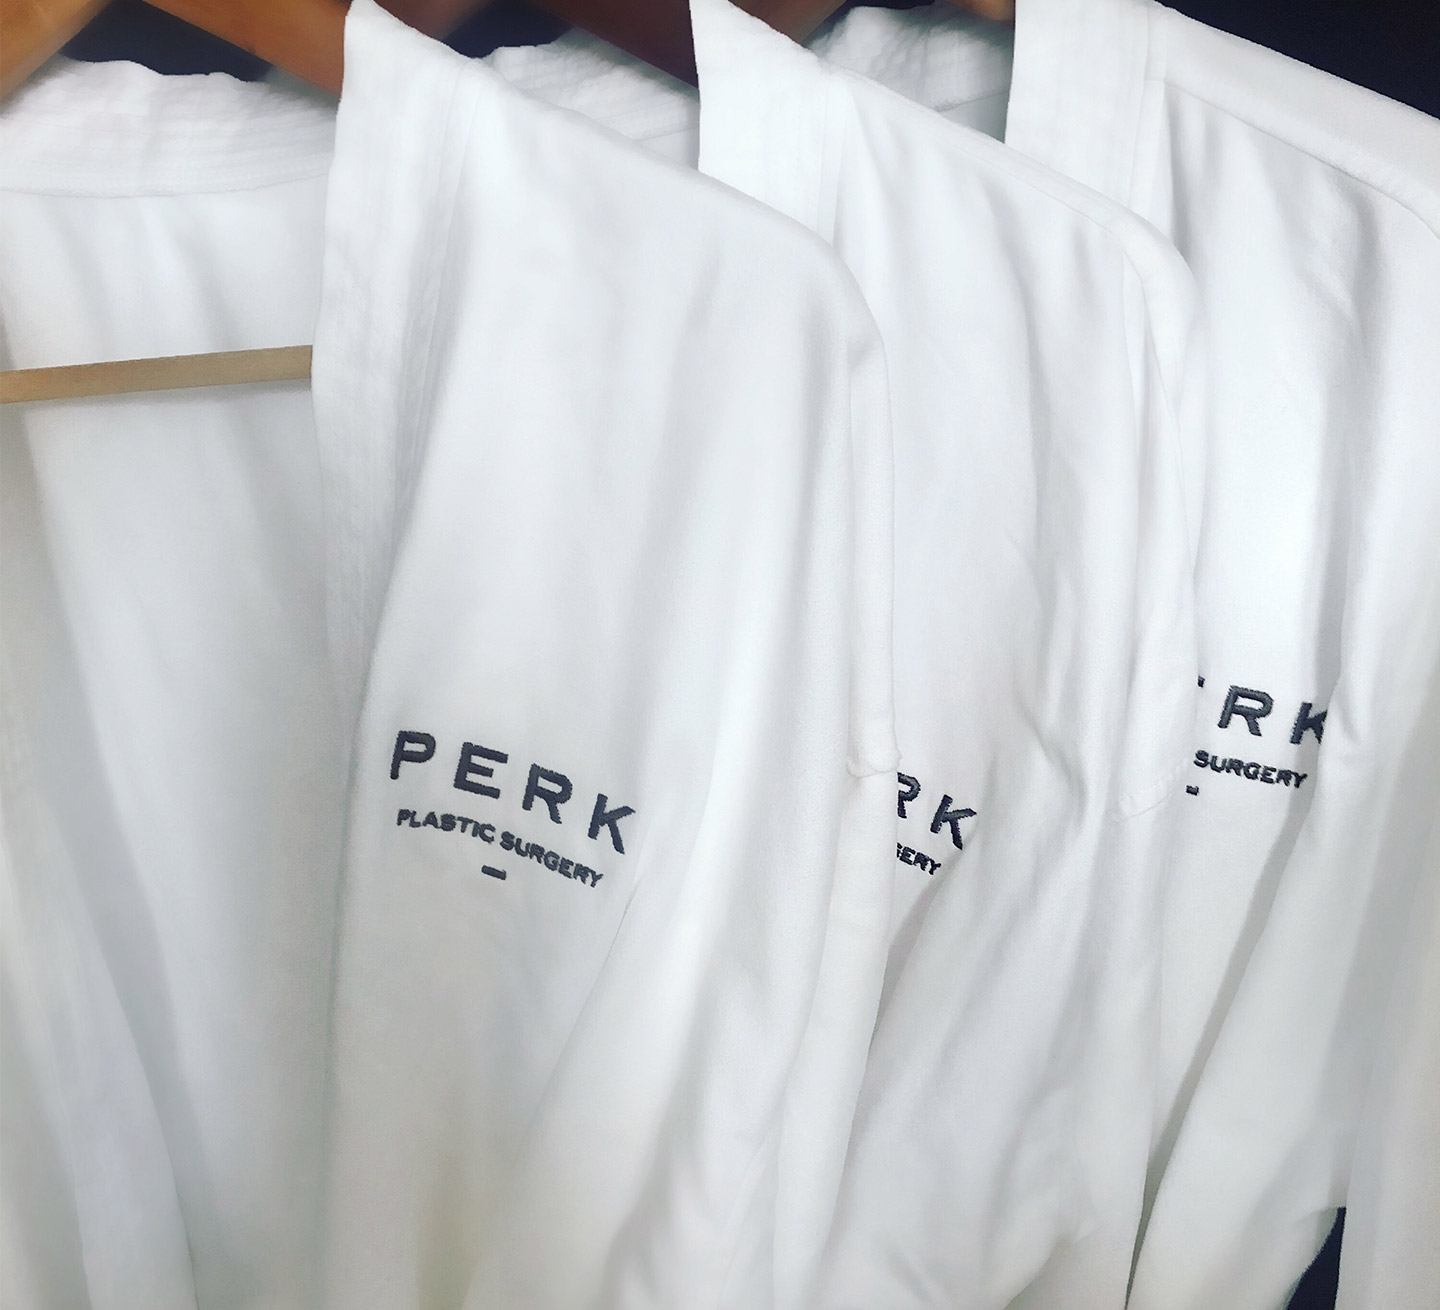 Perk plastic surgery robes